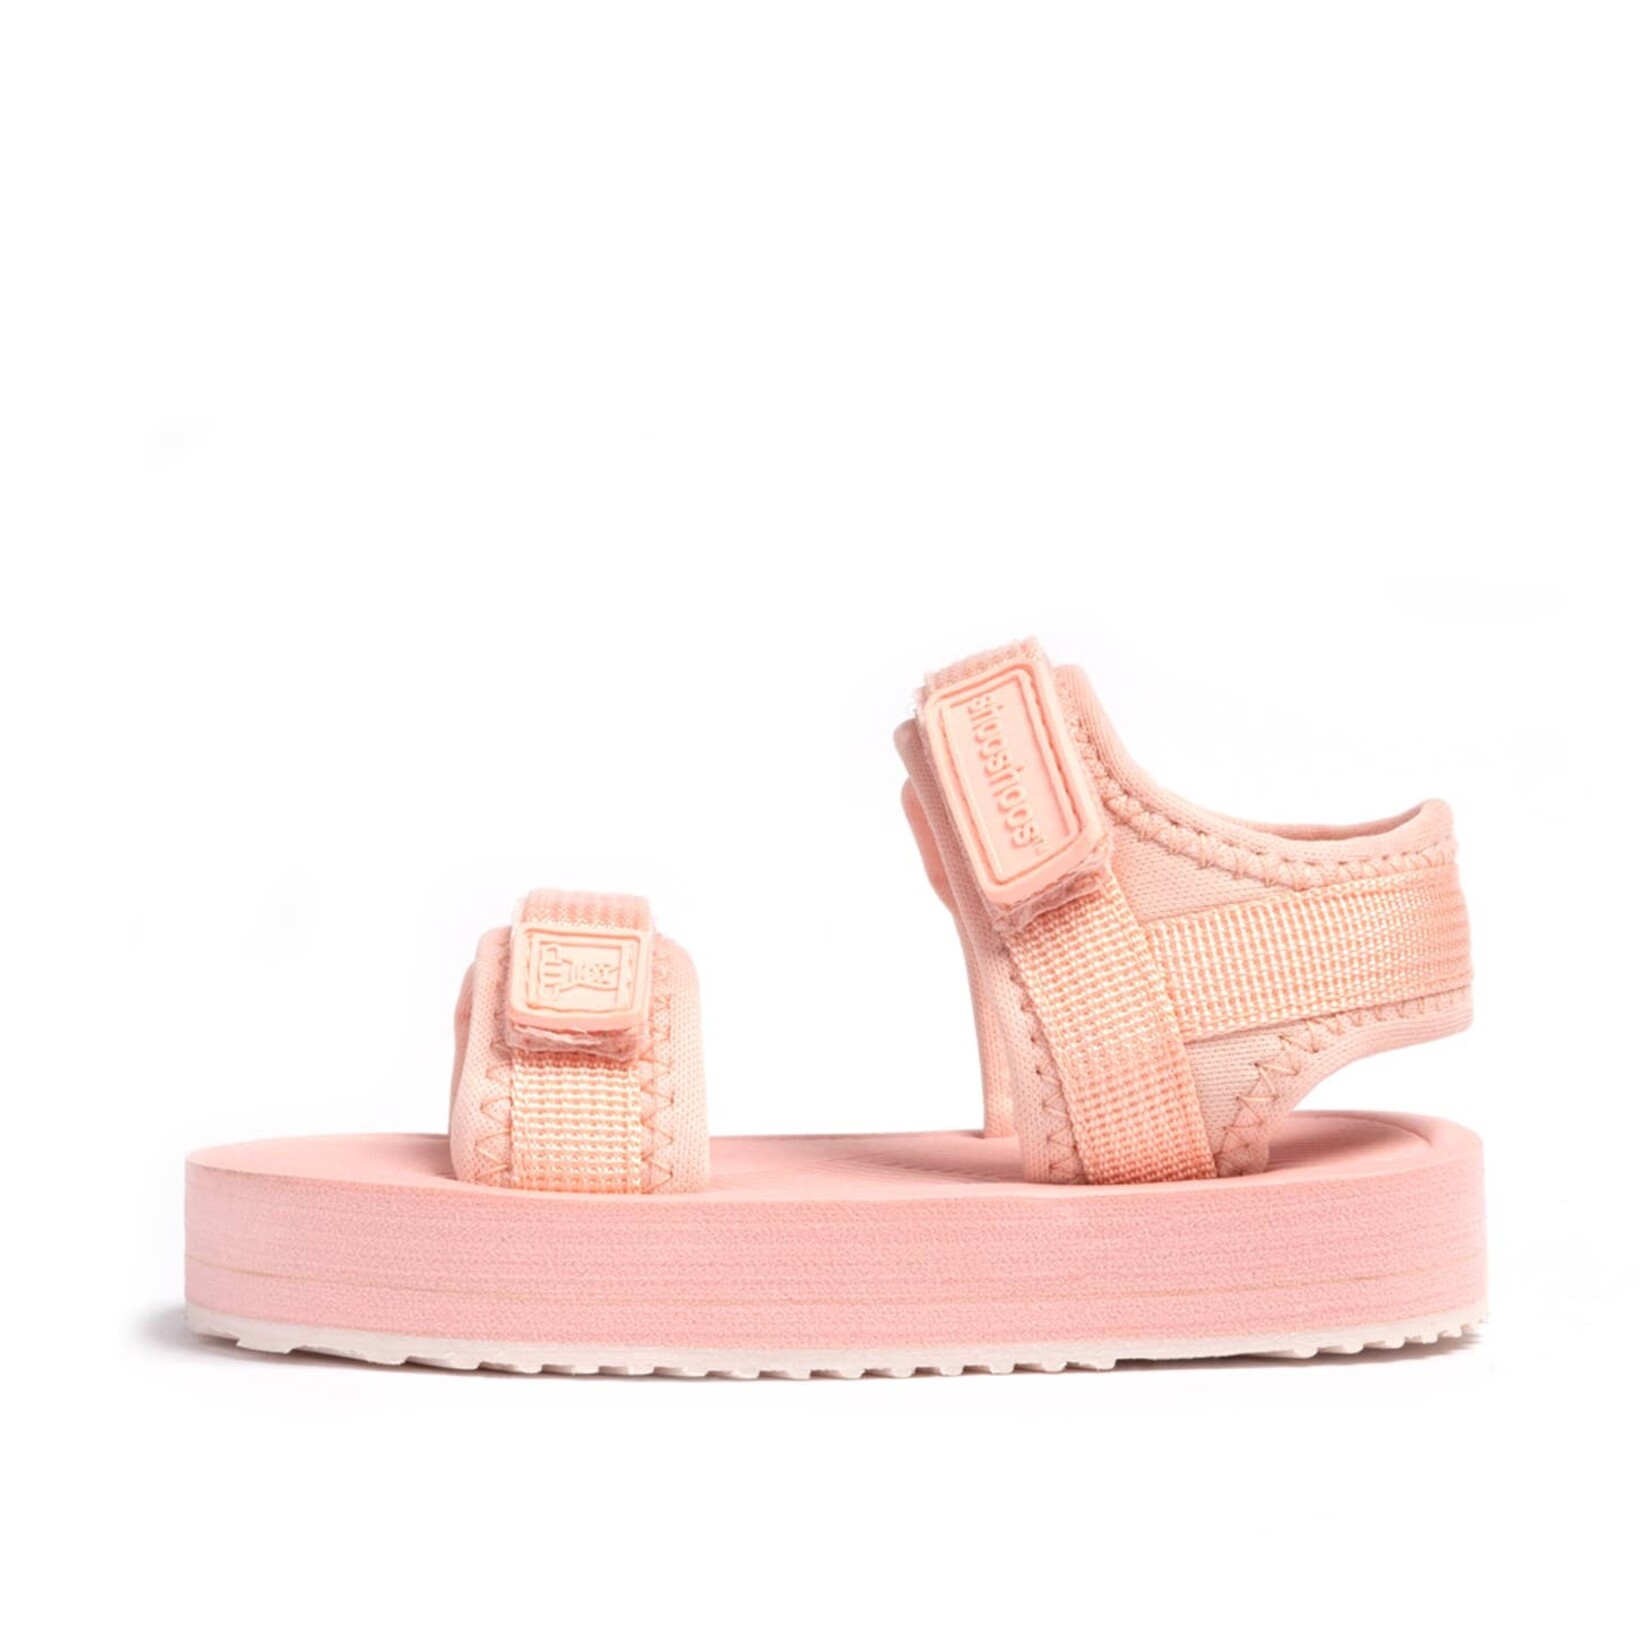 Shooshoos Beach Sandals - Tennessee Sunset Pink